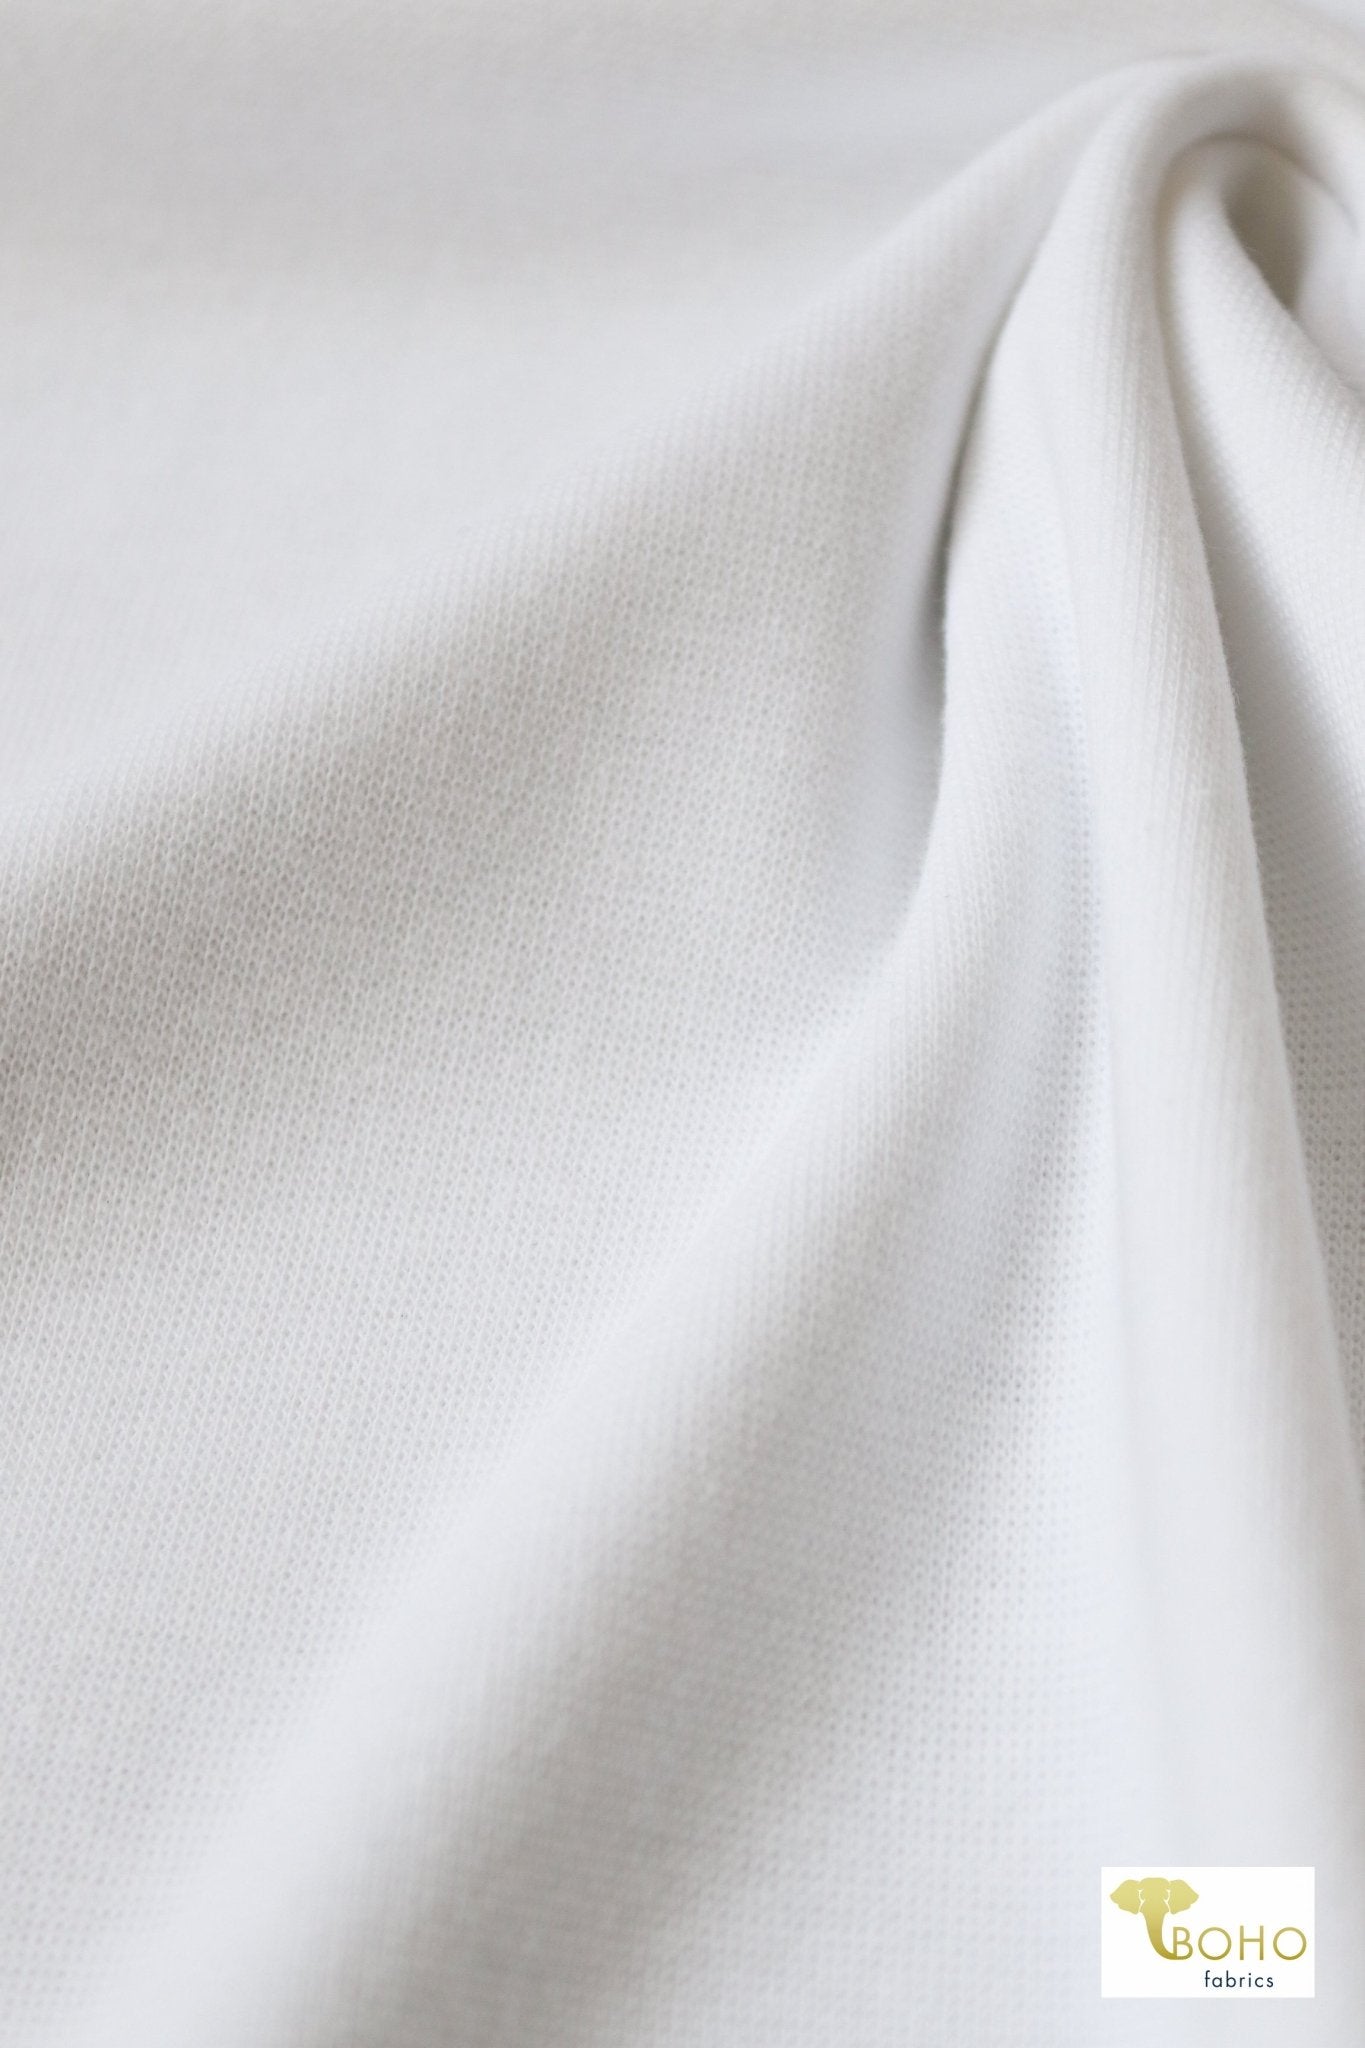 1x1 Rib Knit, White. SOLD BY THE HALF YARD! - Boho Fabrics